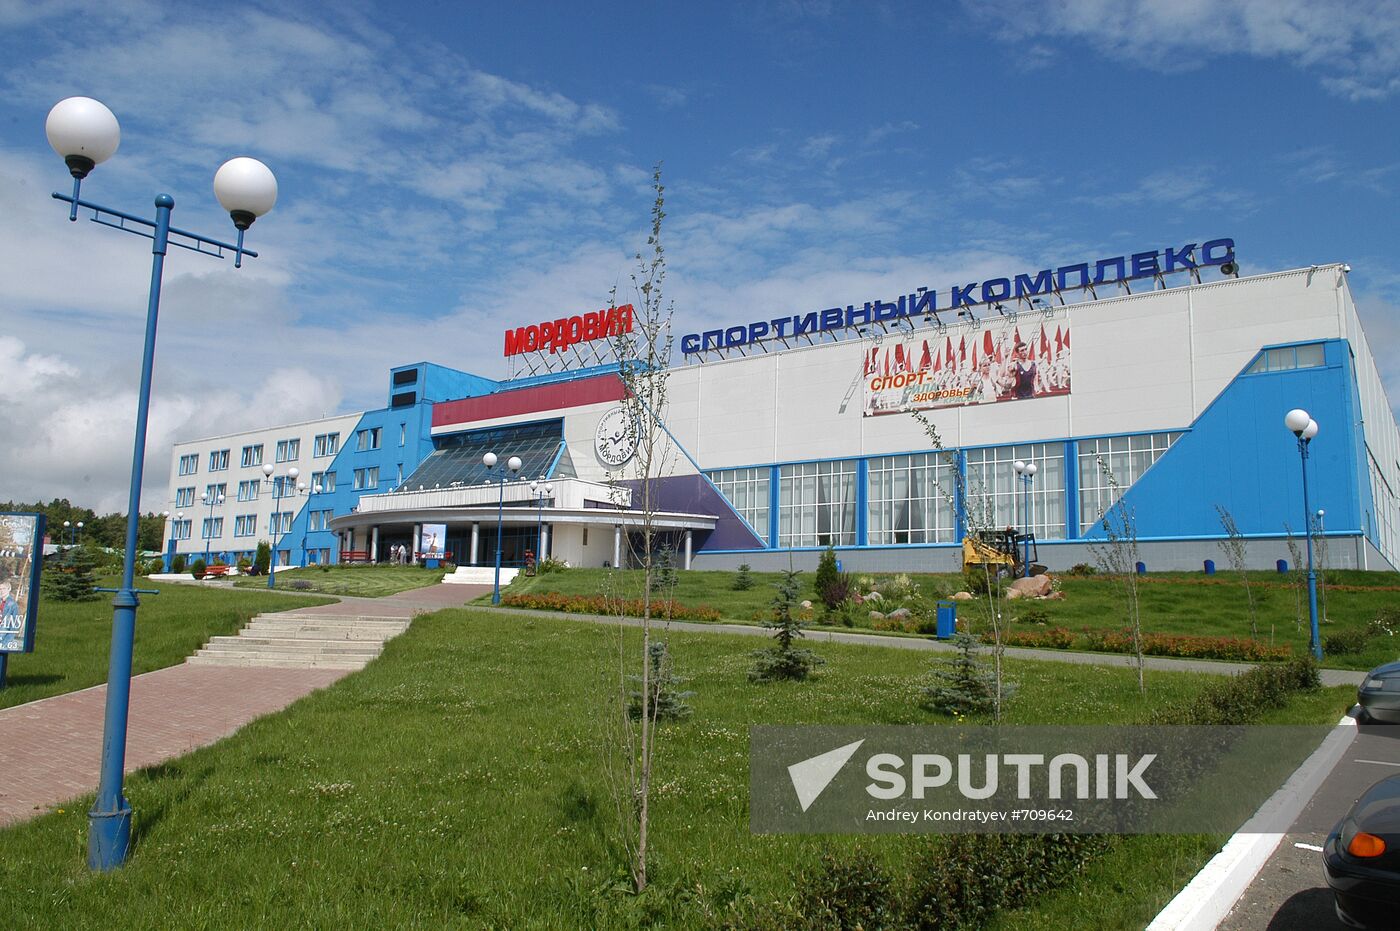 Mordovia sports center